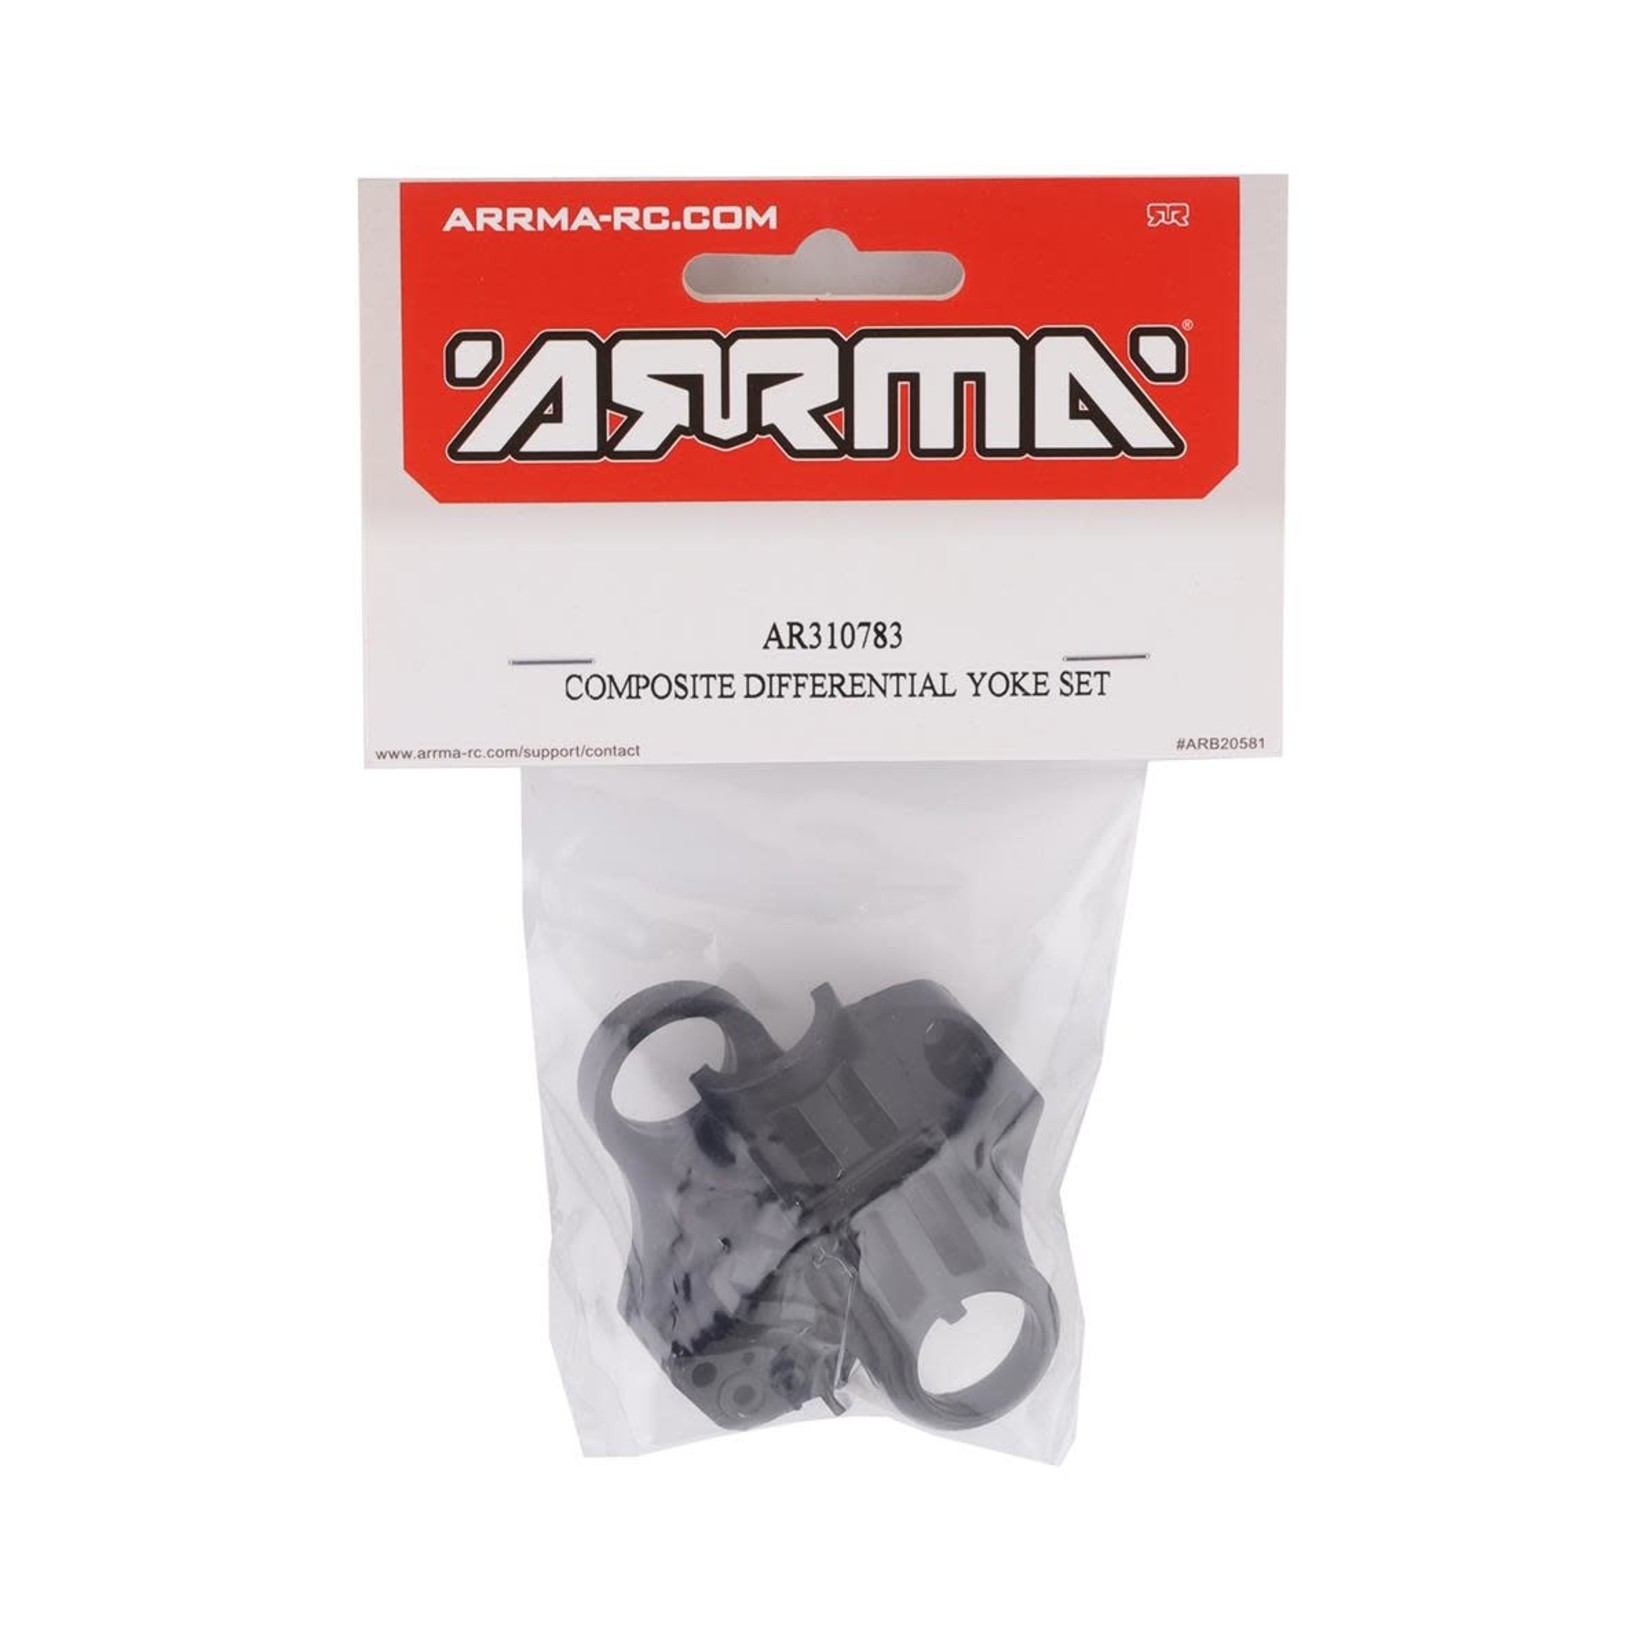 ARRMA Arrma 4x4 Composite Differential Yoke Set #AR310783